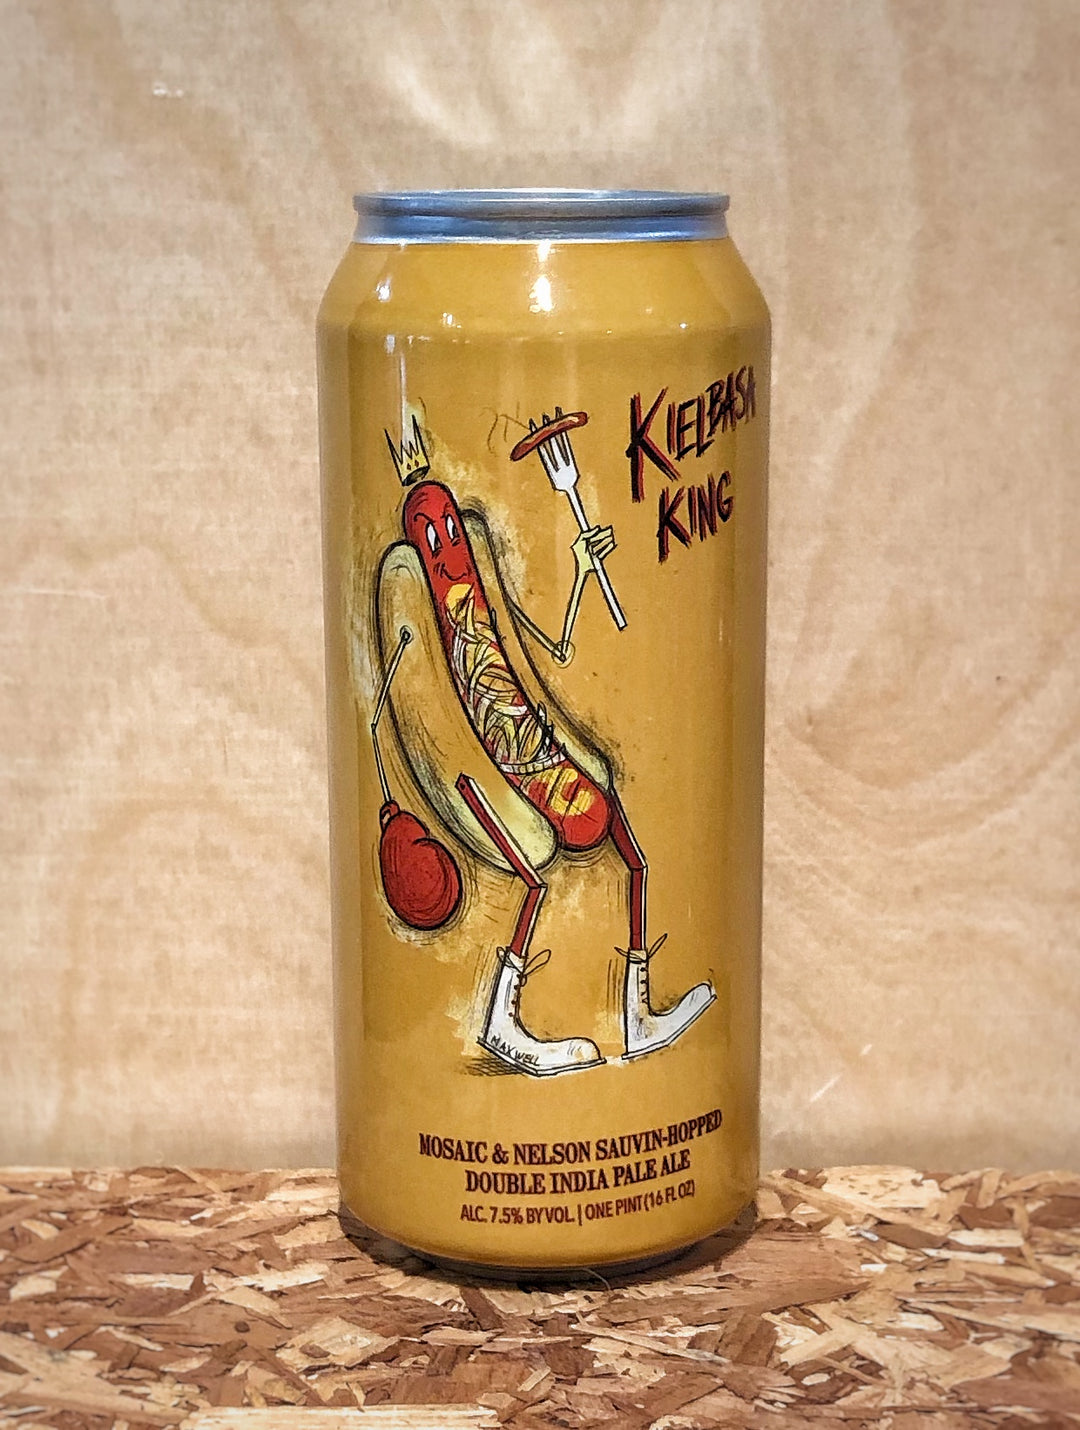 Hop Butcher For The World 'Kielbasa King' Mosaic & Nelson Sauvin-hopped Double India Pale Ale (Bedford Park, IL)